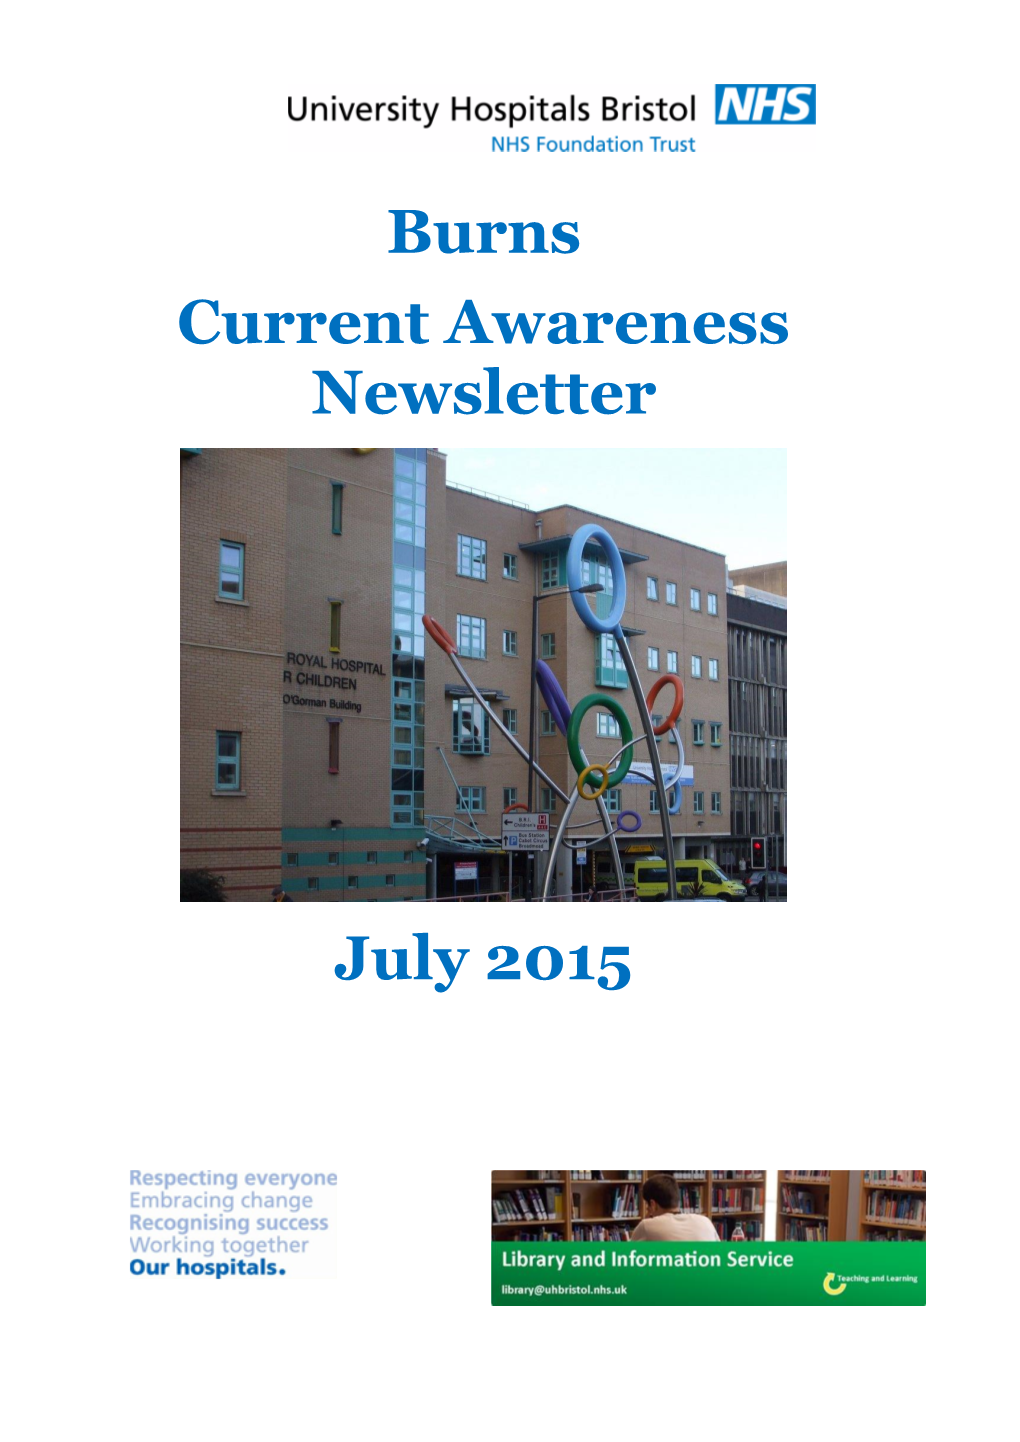 Burns Current Awareness Newsletter July 2015